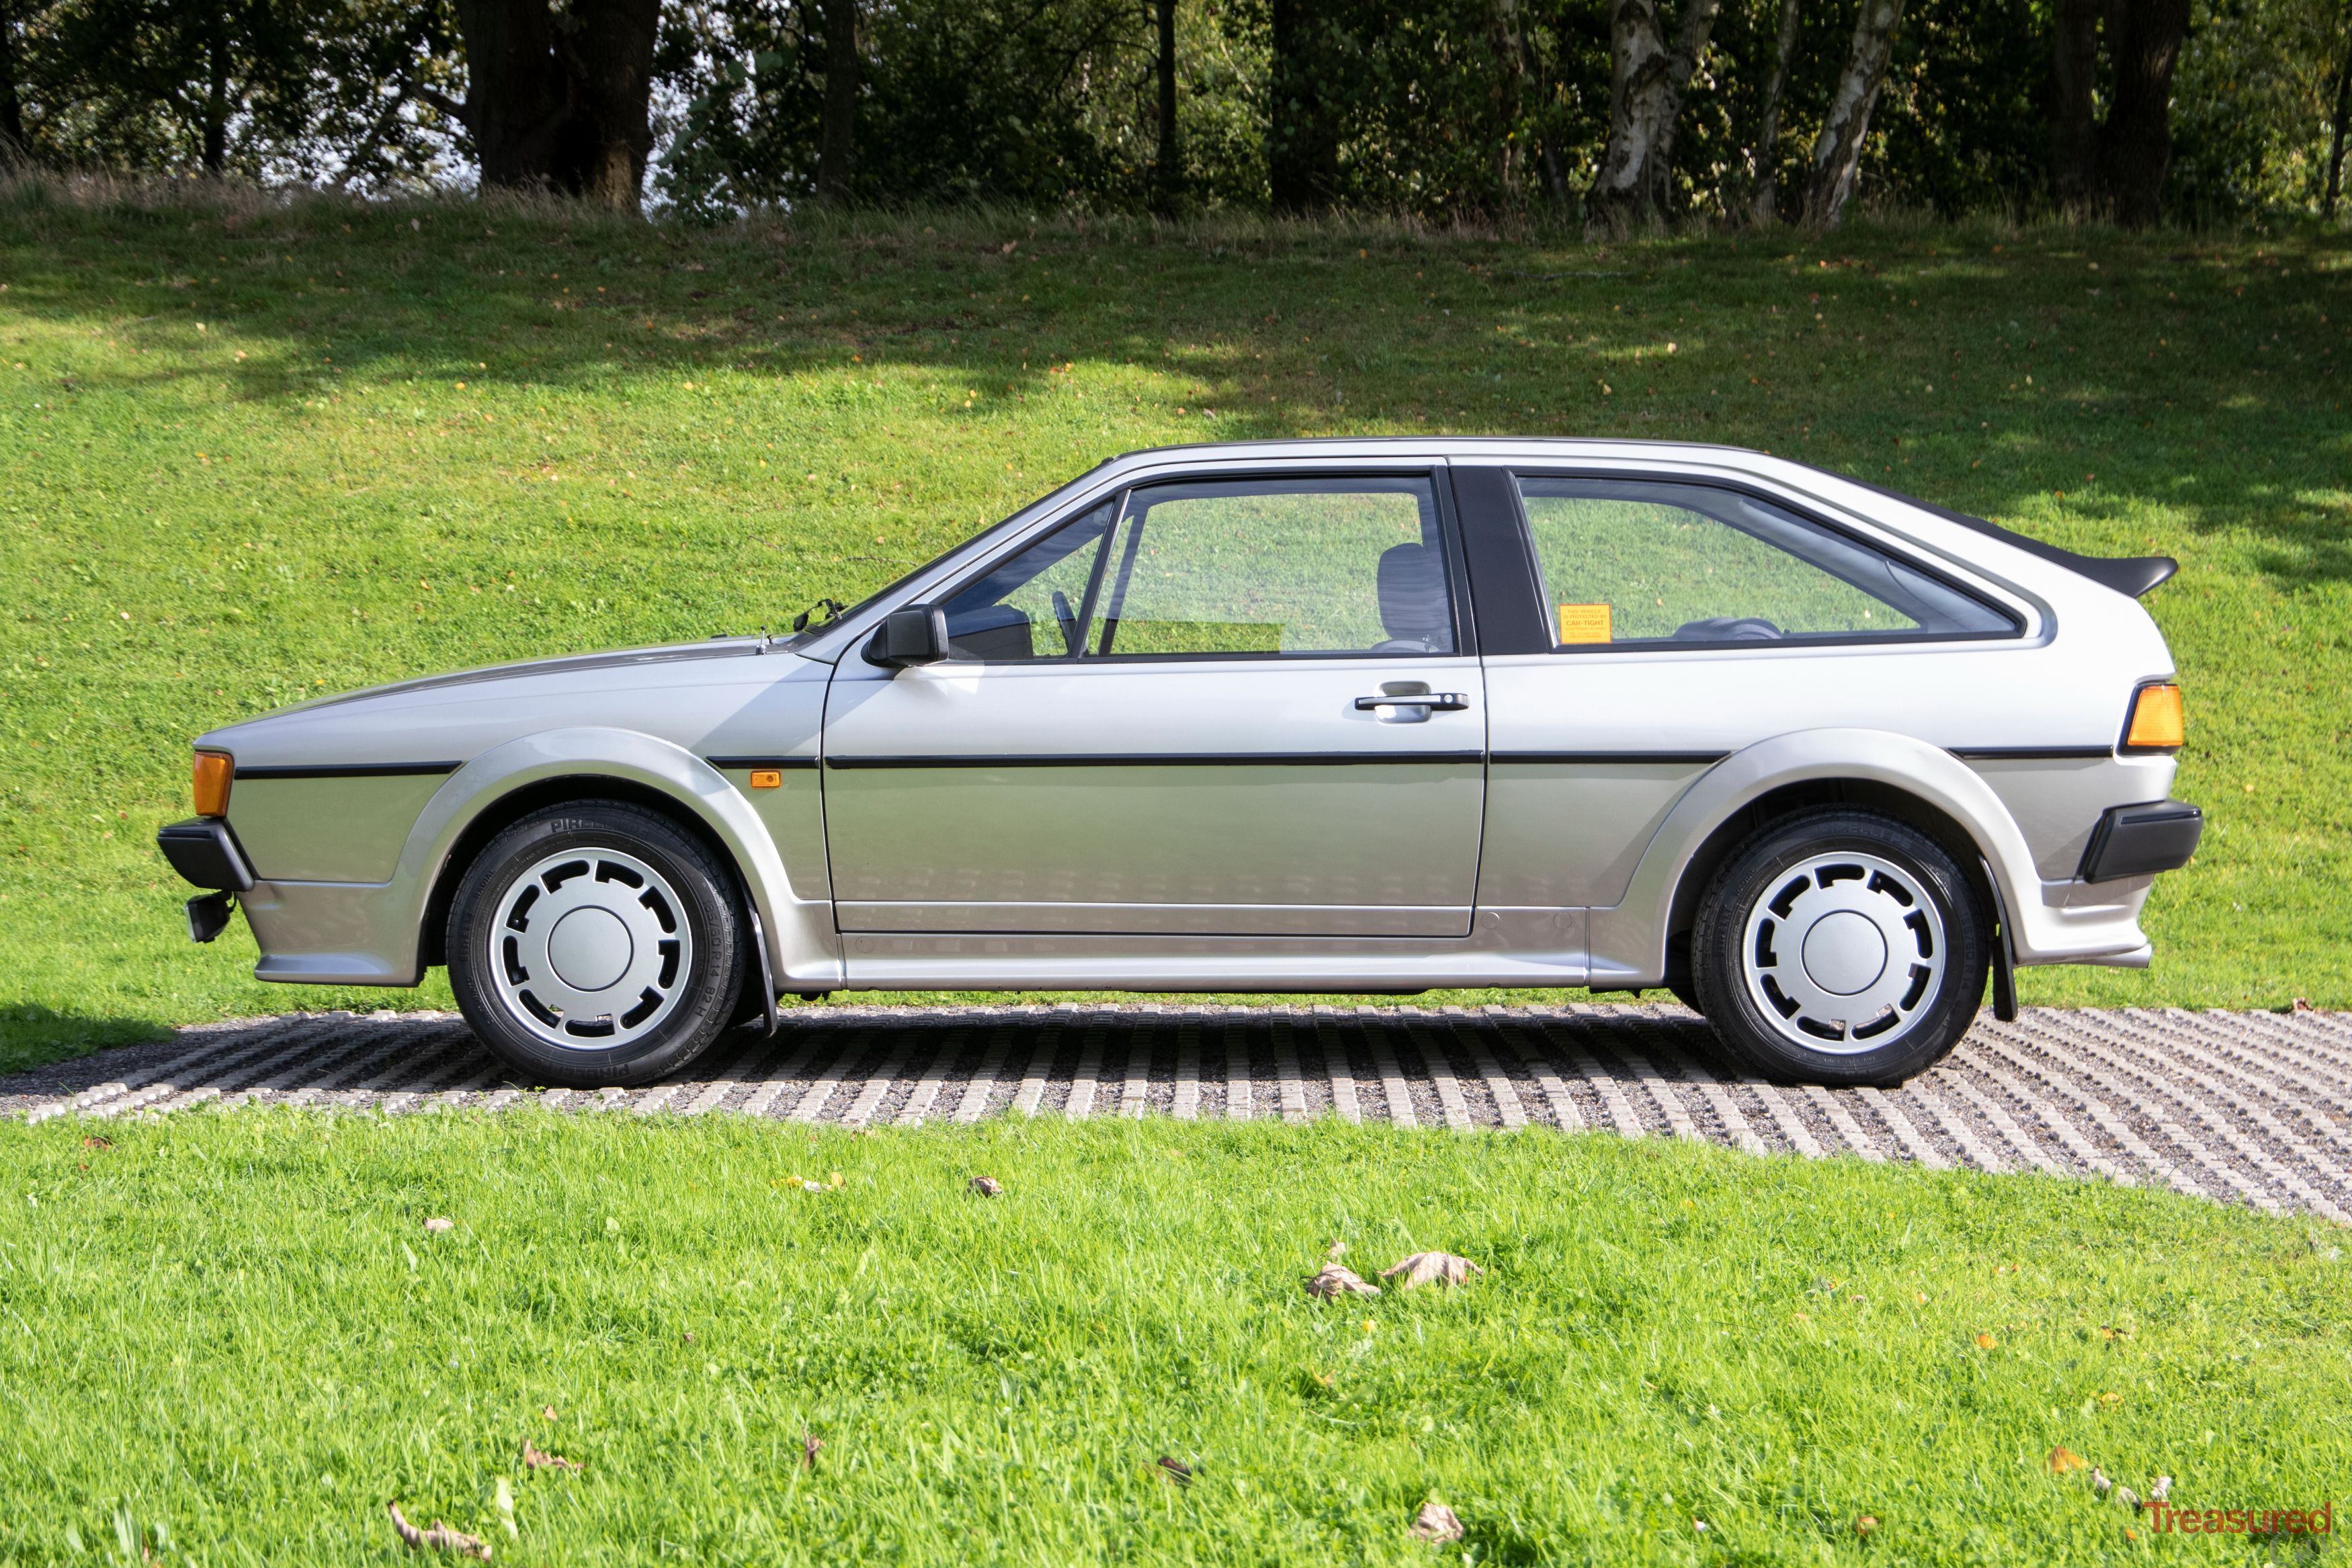 Volkswagen Scirocco Classic Cars for Sale - Classics on Autotrader